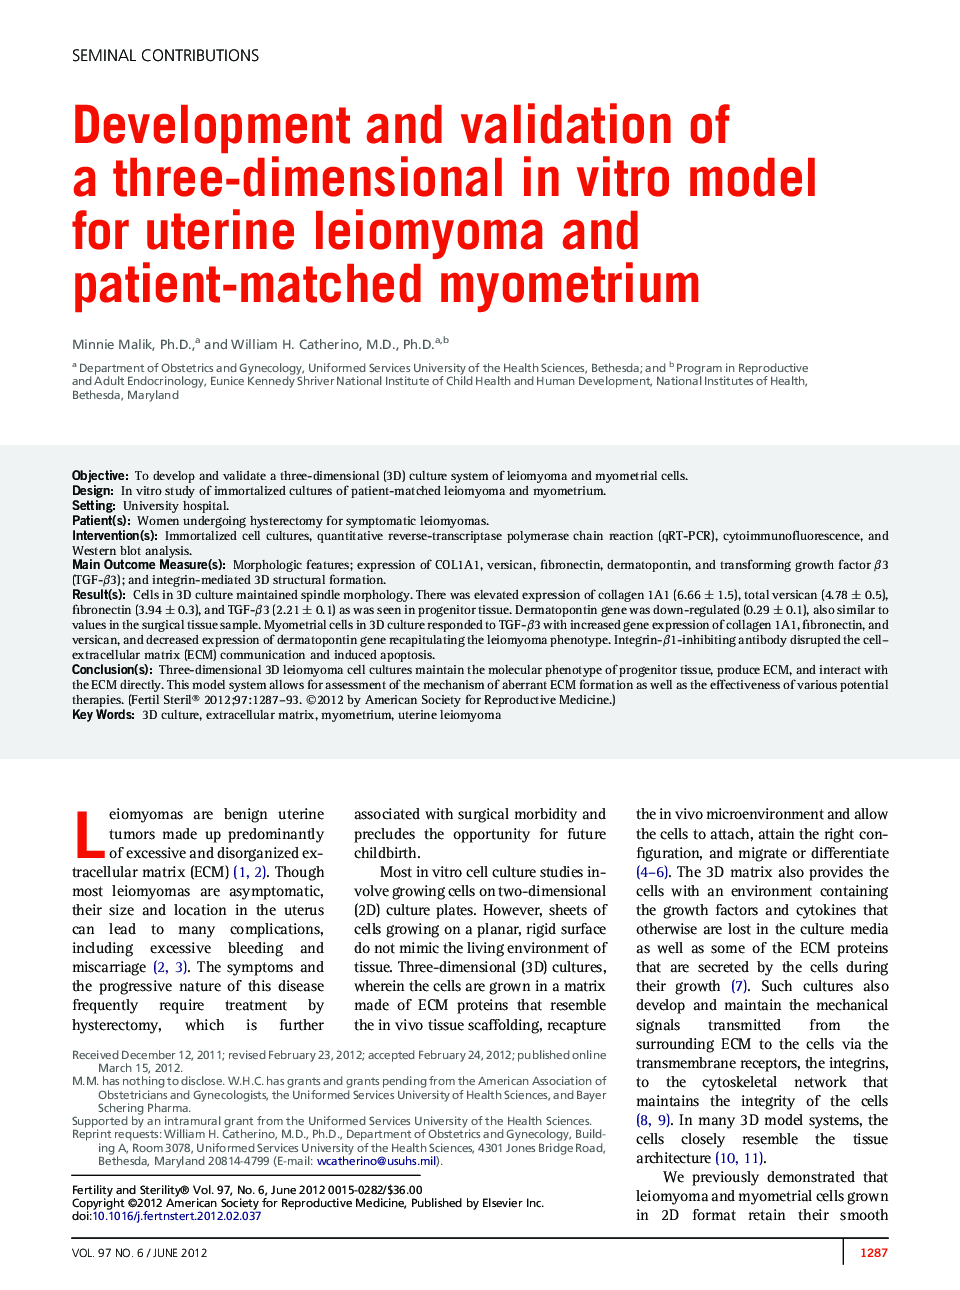 Development and validation of a three-dimensional inÂ vitro model forÂ uterine leiomyoma and patient-matched myometrium